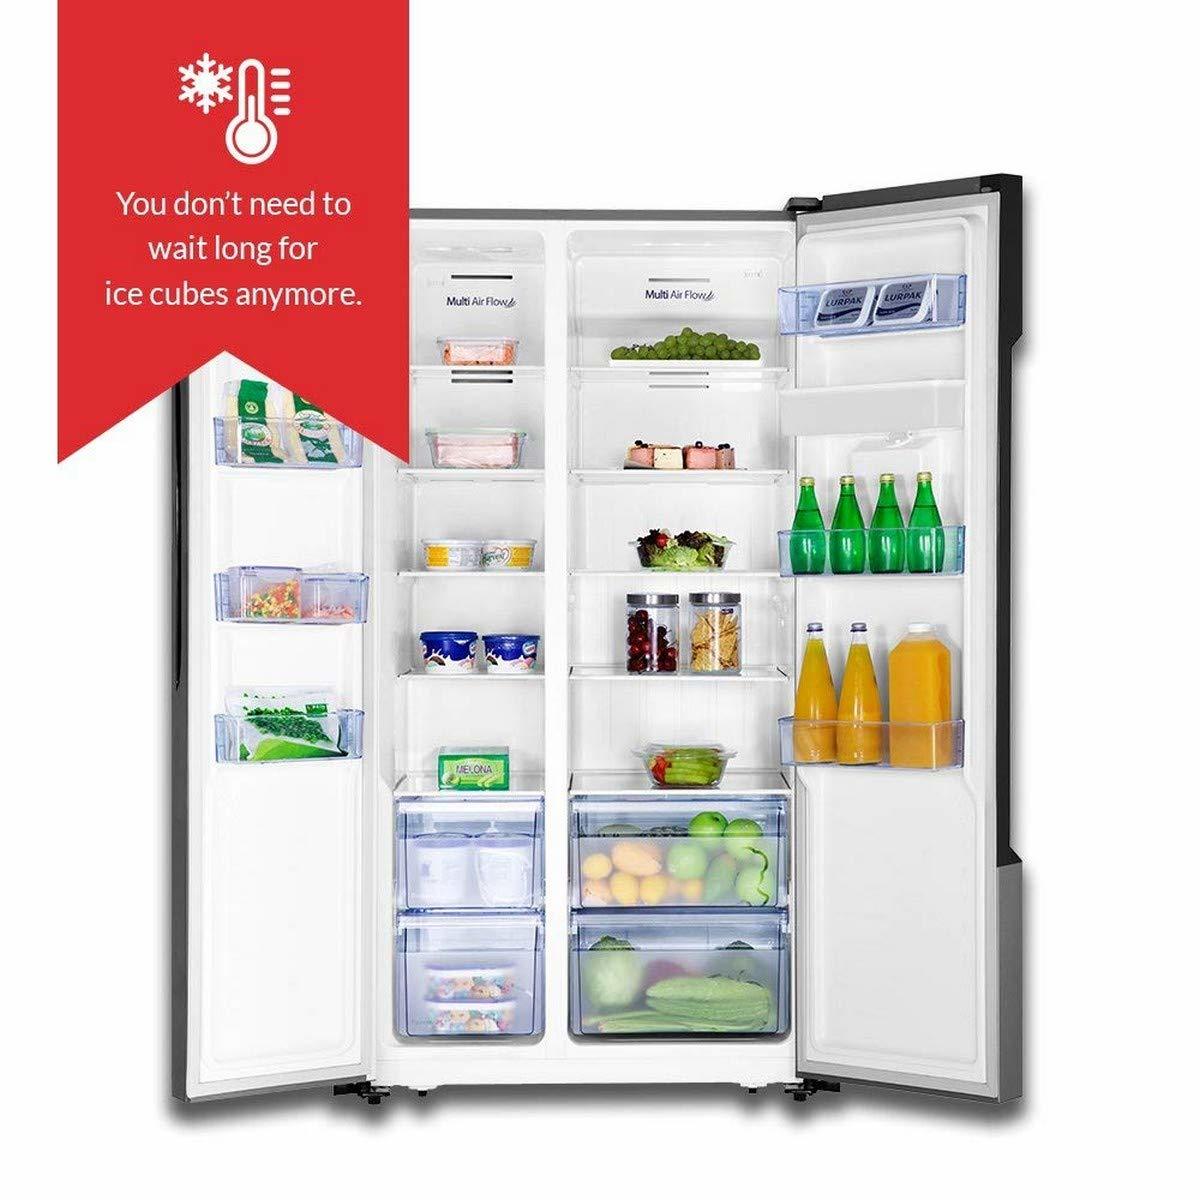 BPL 564 L Frost Free Side-by-Side Refrigerator(BRS564H, Steel)